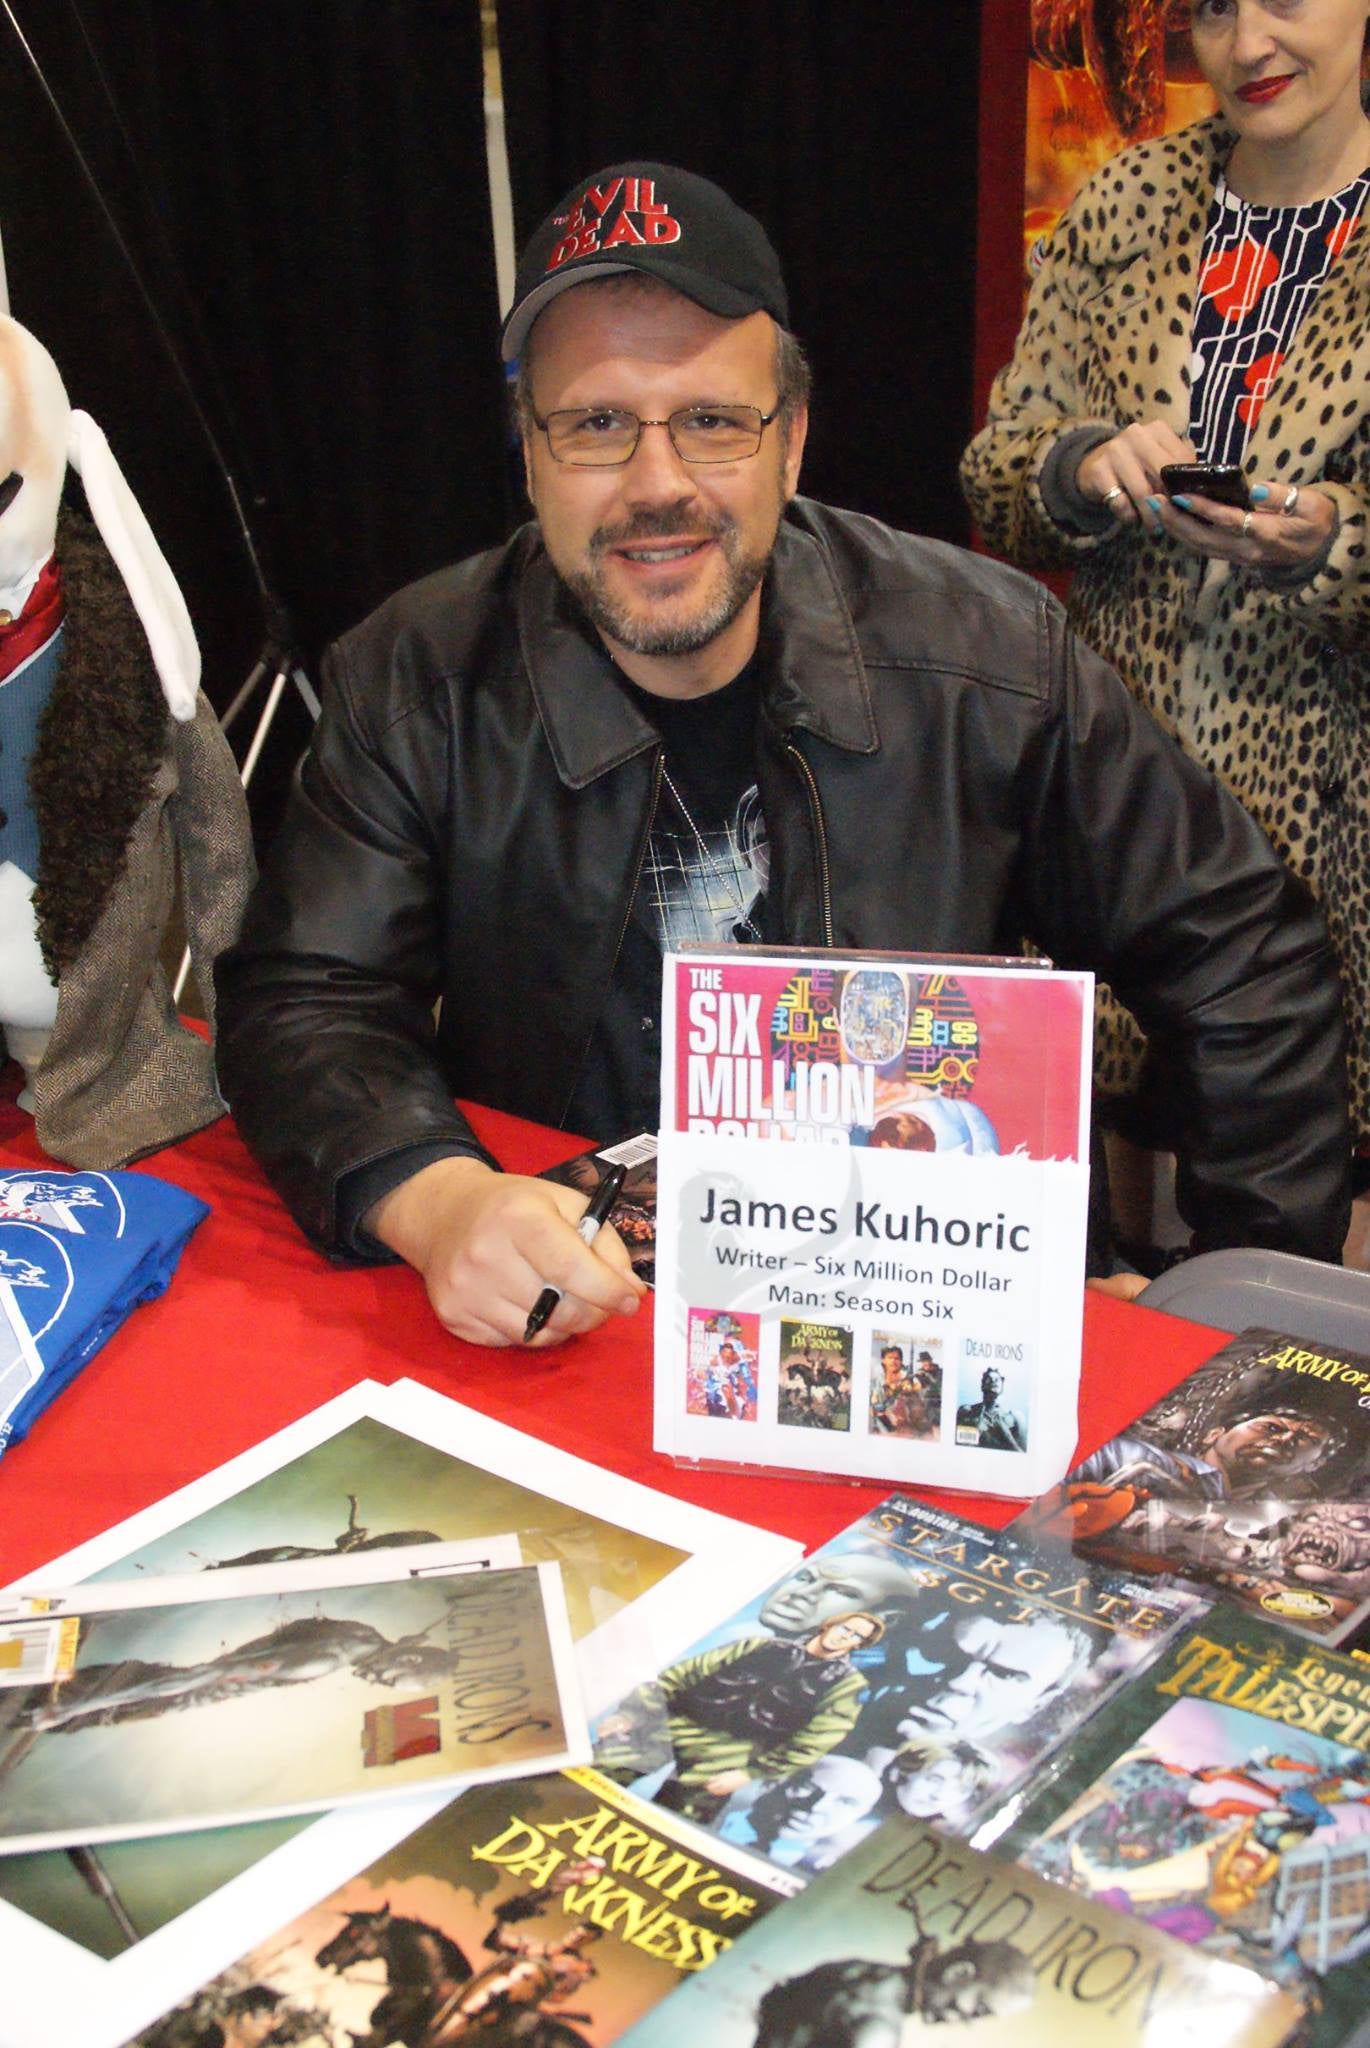 Dynamite comics' James Kuhoric sitting at an autograph booth